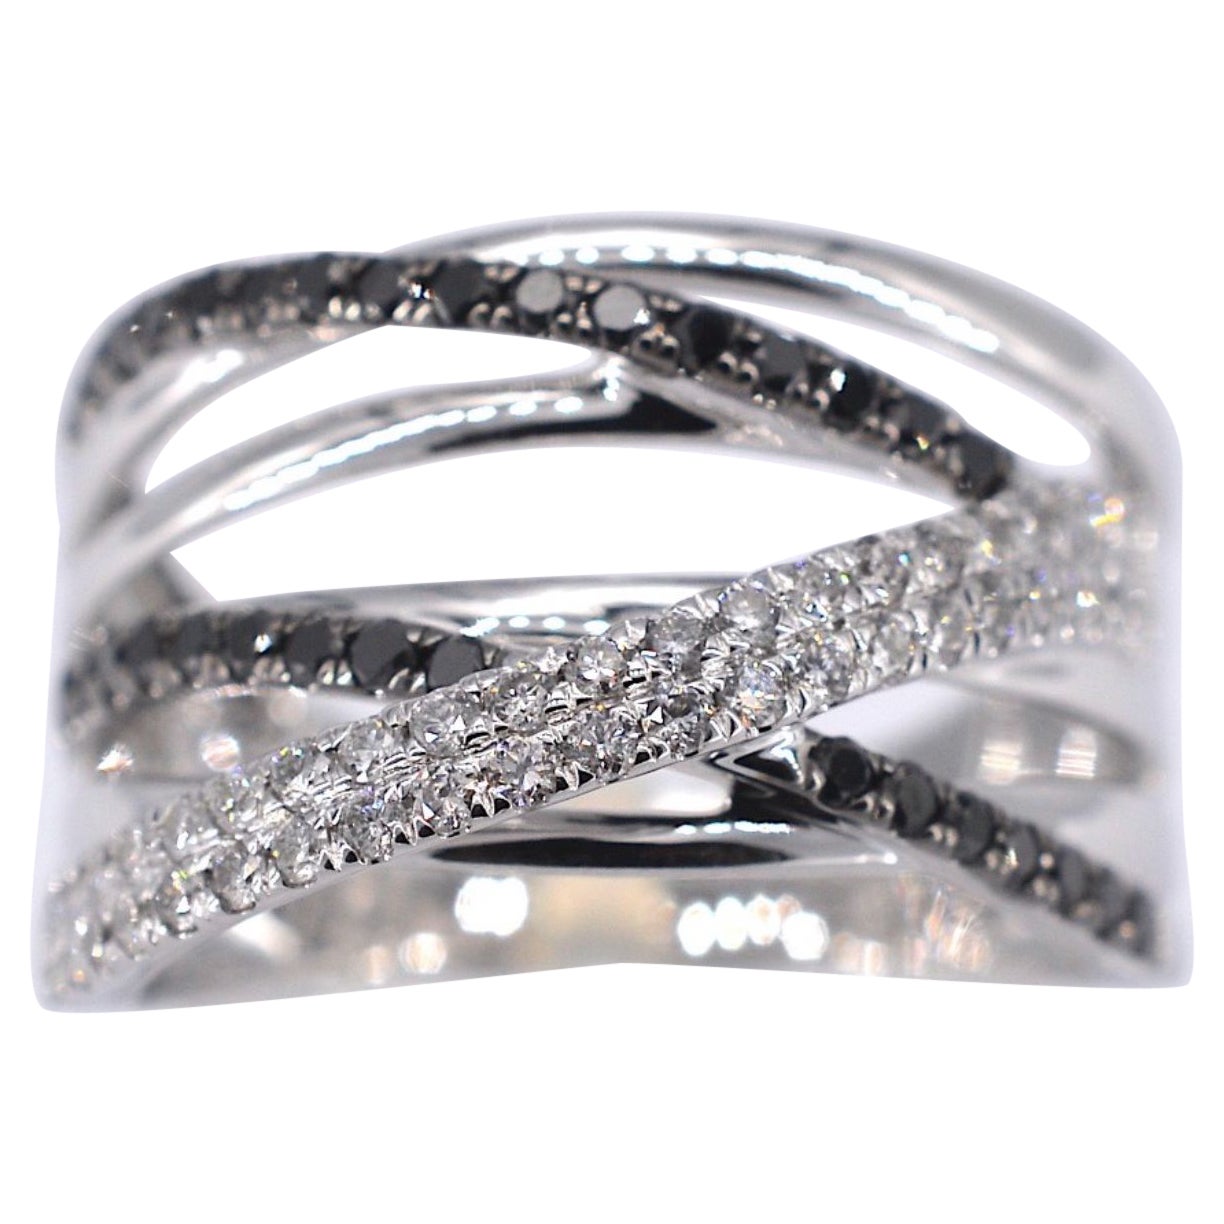 White Gold Design Ring with White and Black Brilliant Diamonds